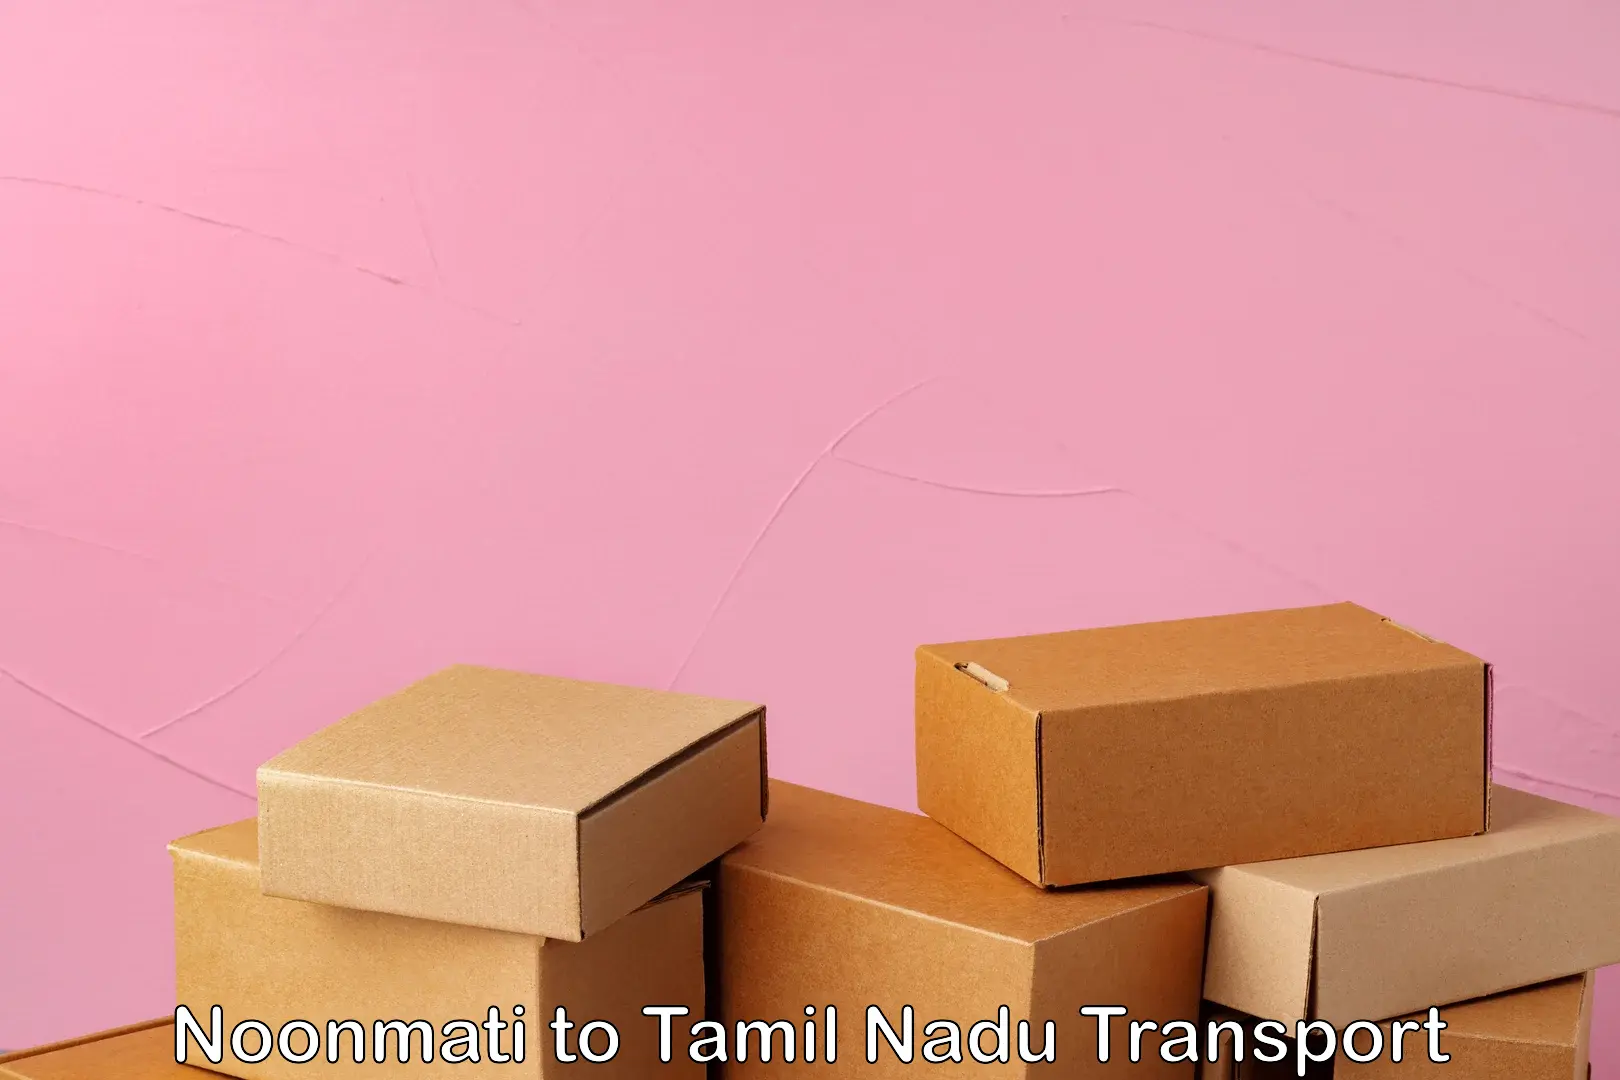 Truck transport companies in India in Noonmati to Thirukkattupalli